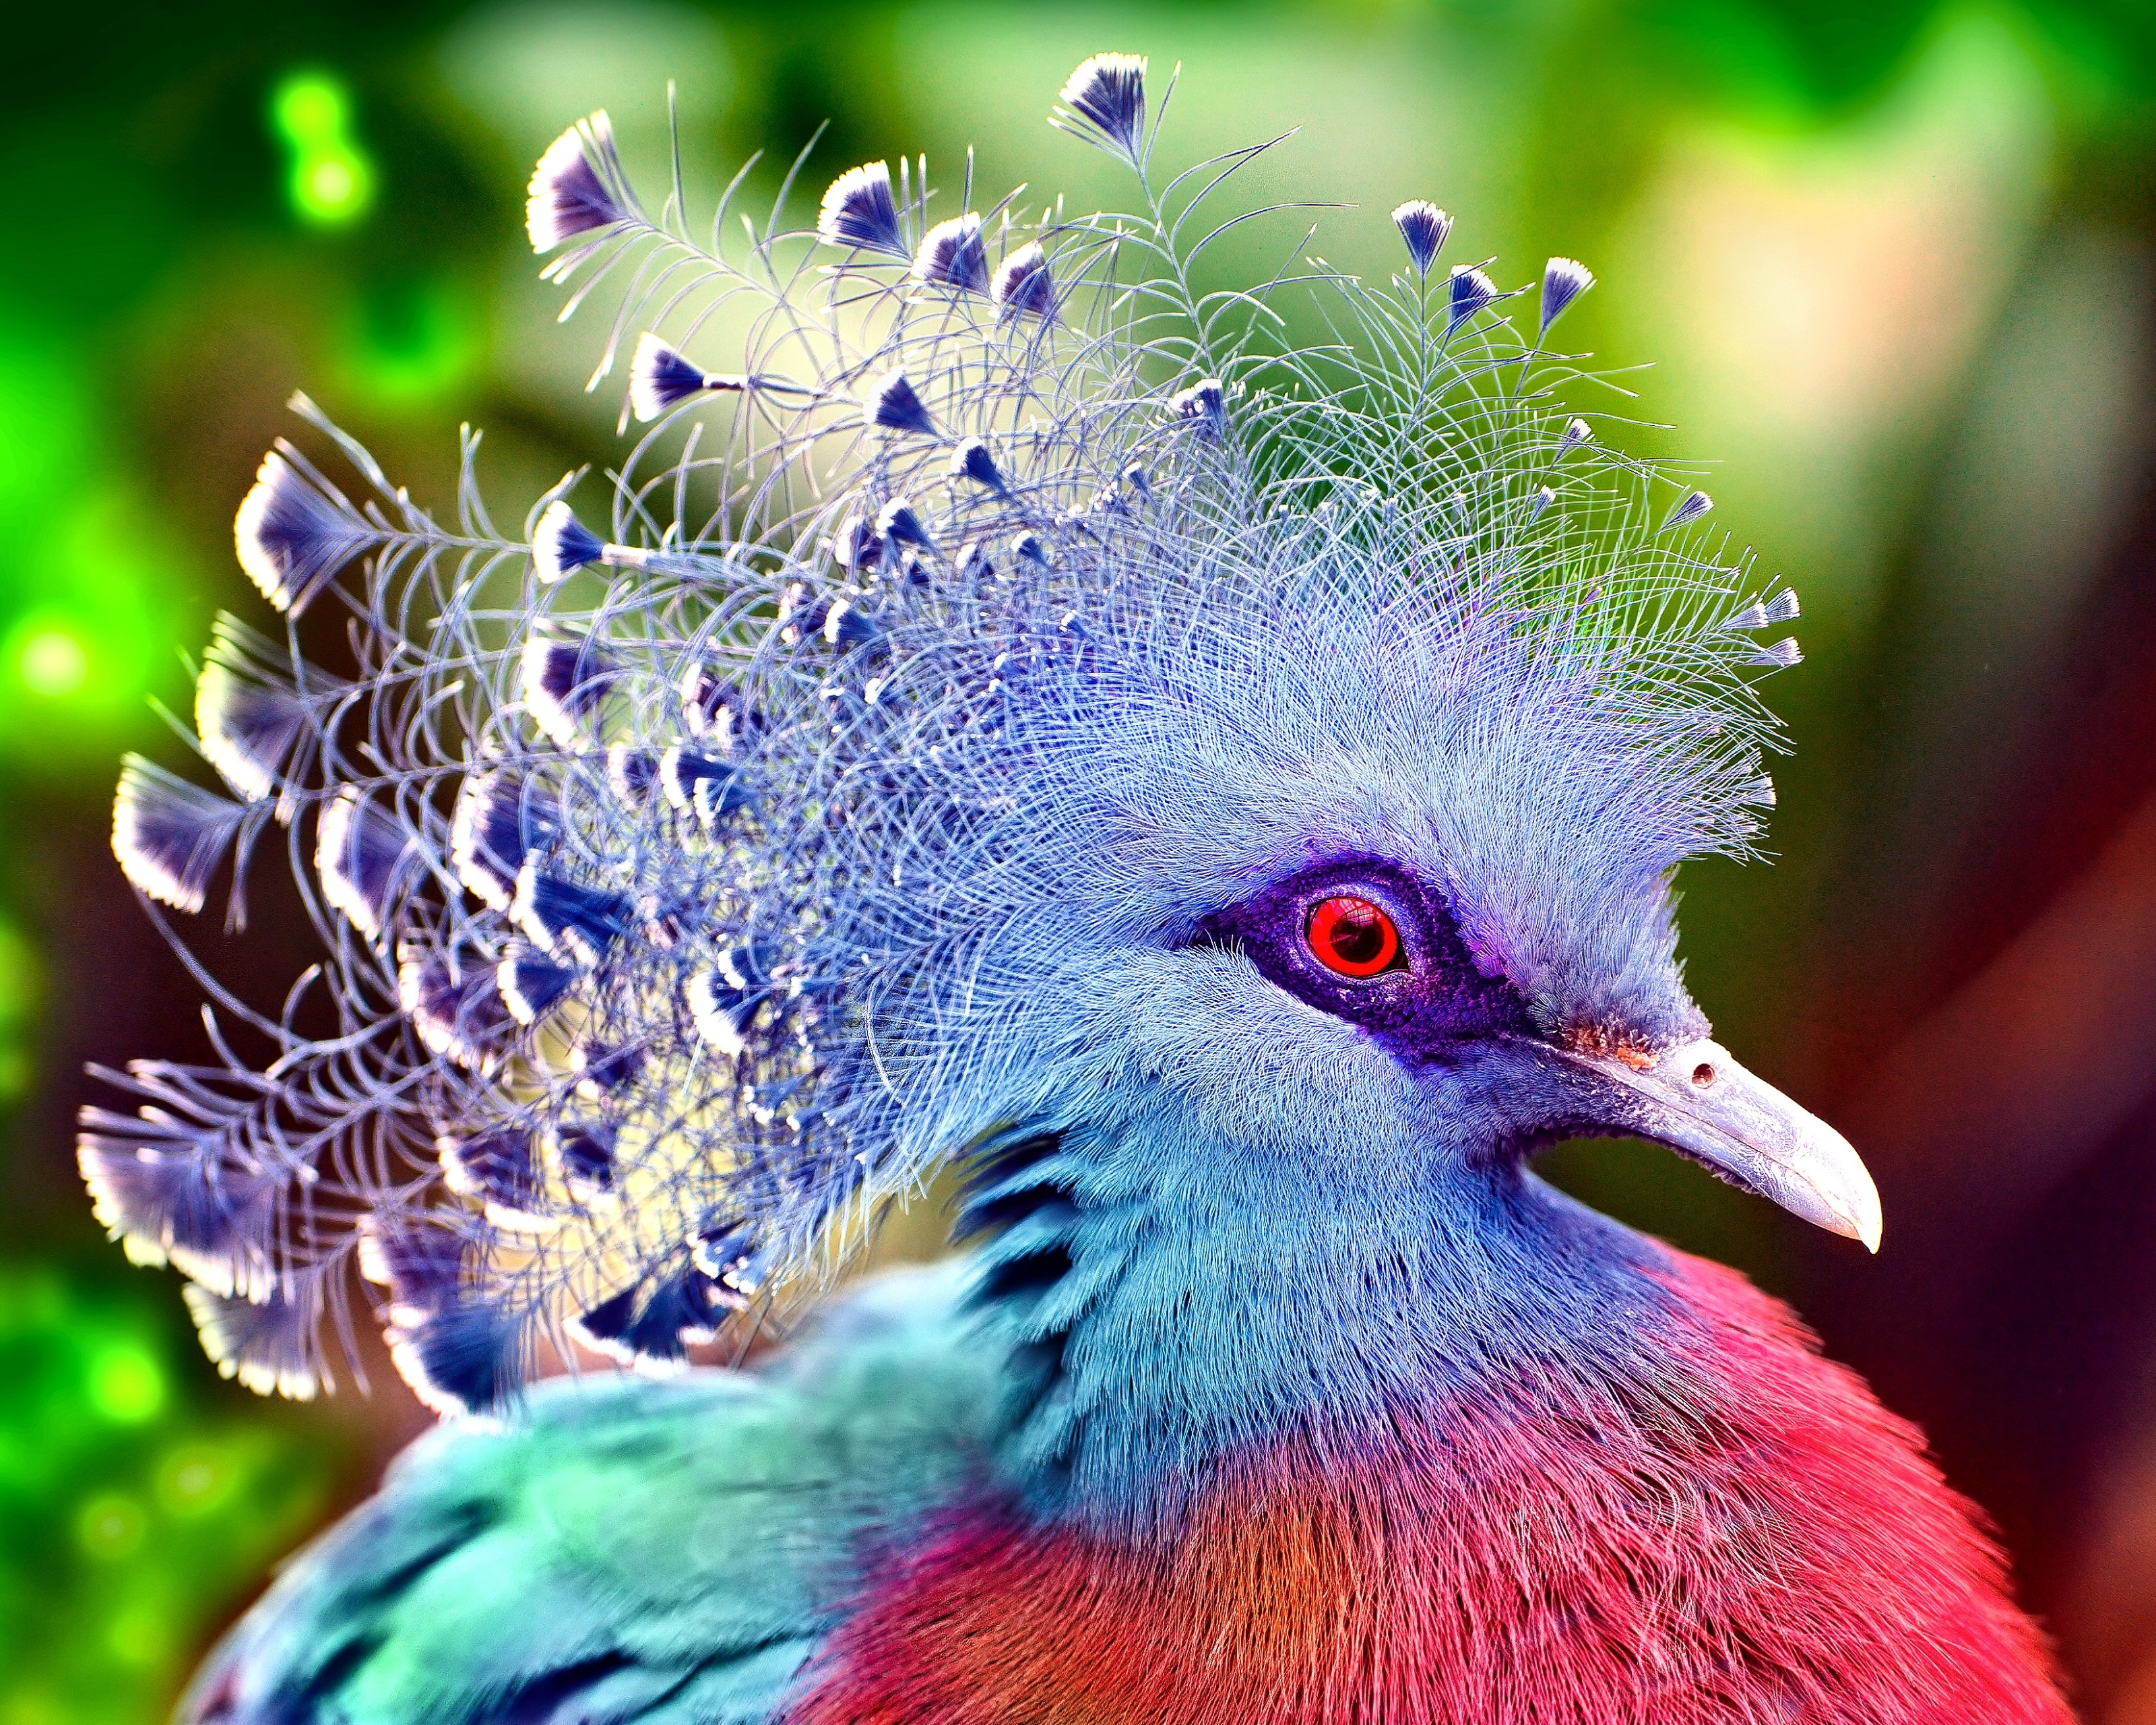 1125837 descargar imagen animales, paloma coronada victoria, pájaro, ave, vistoso, paloma, aves: fondos de pantalla y protectores de pantalla gratis